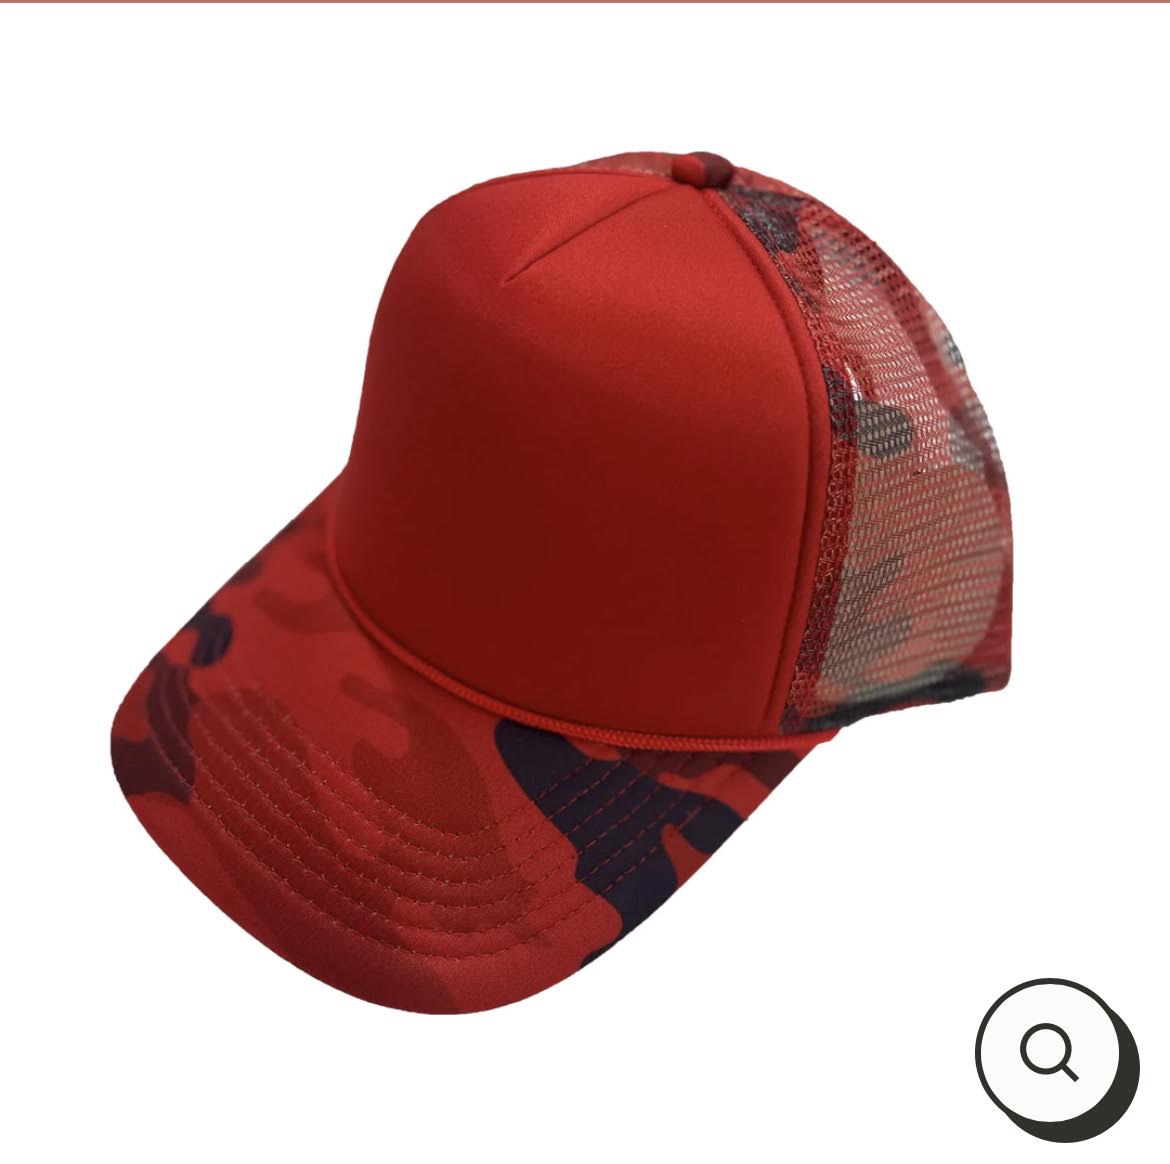 Full Red Camo Hat